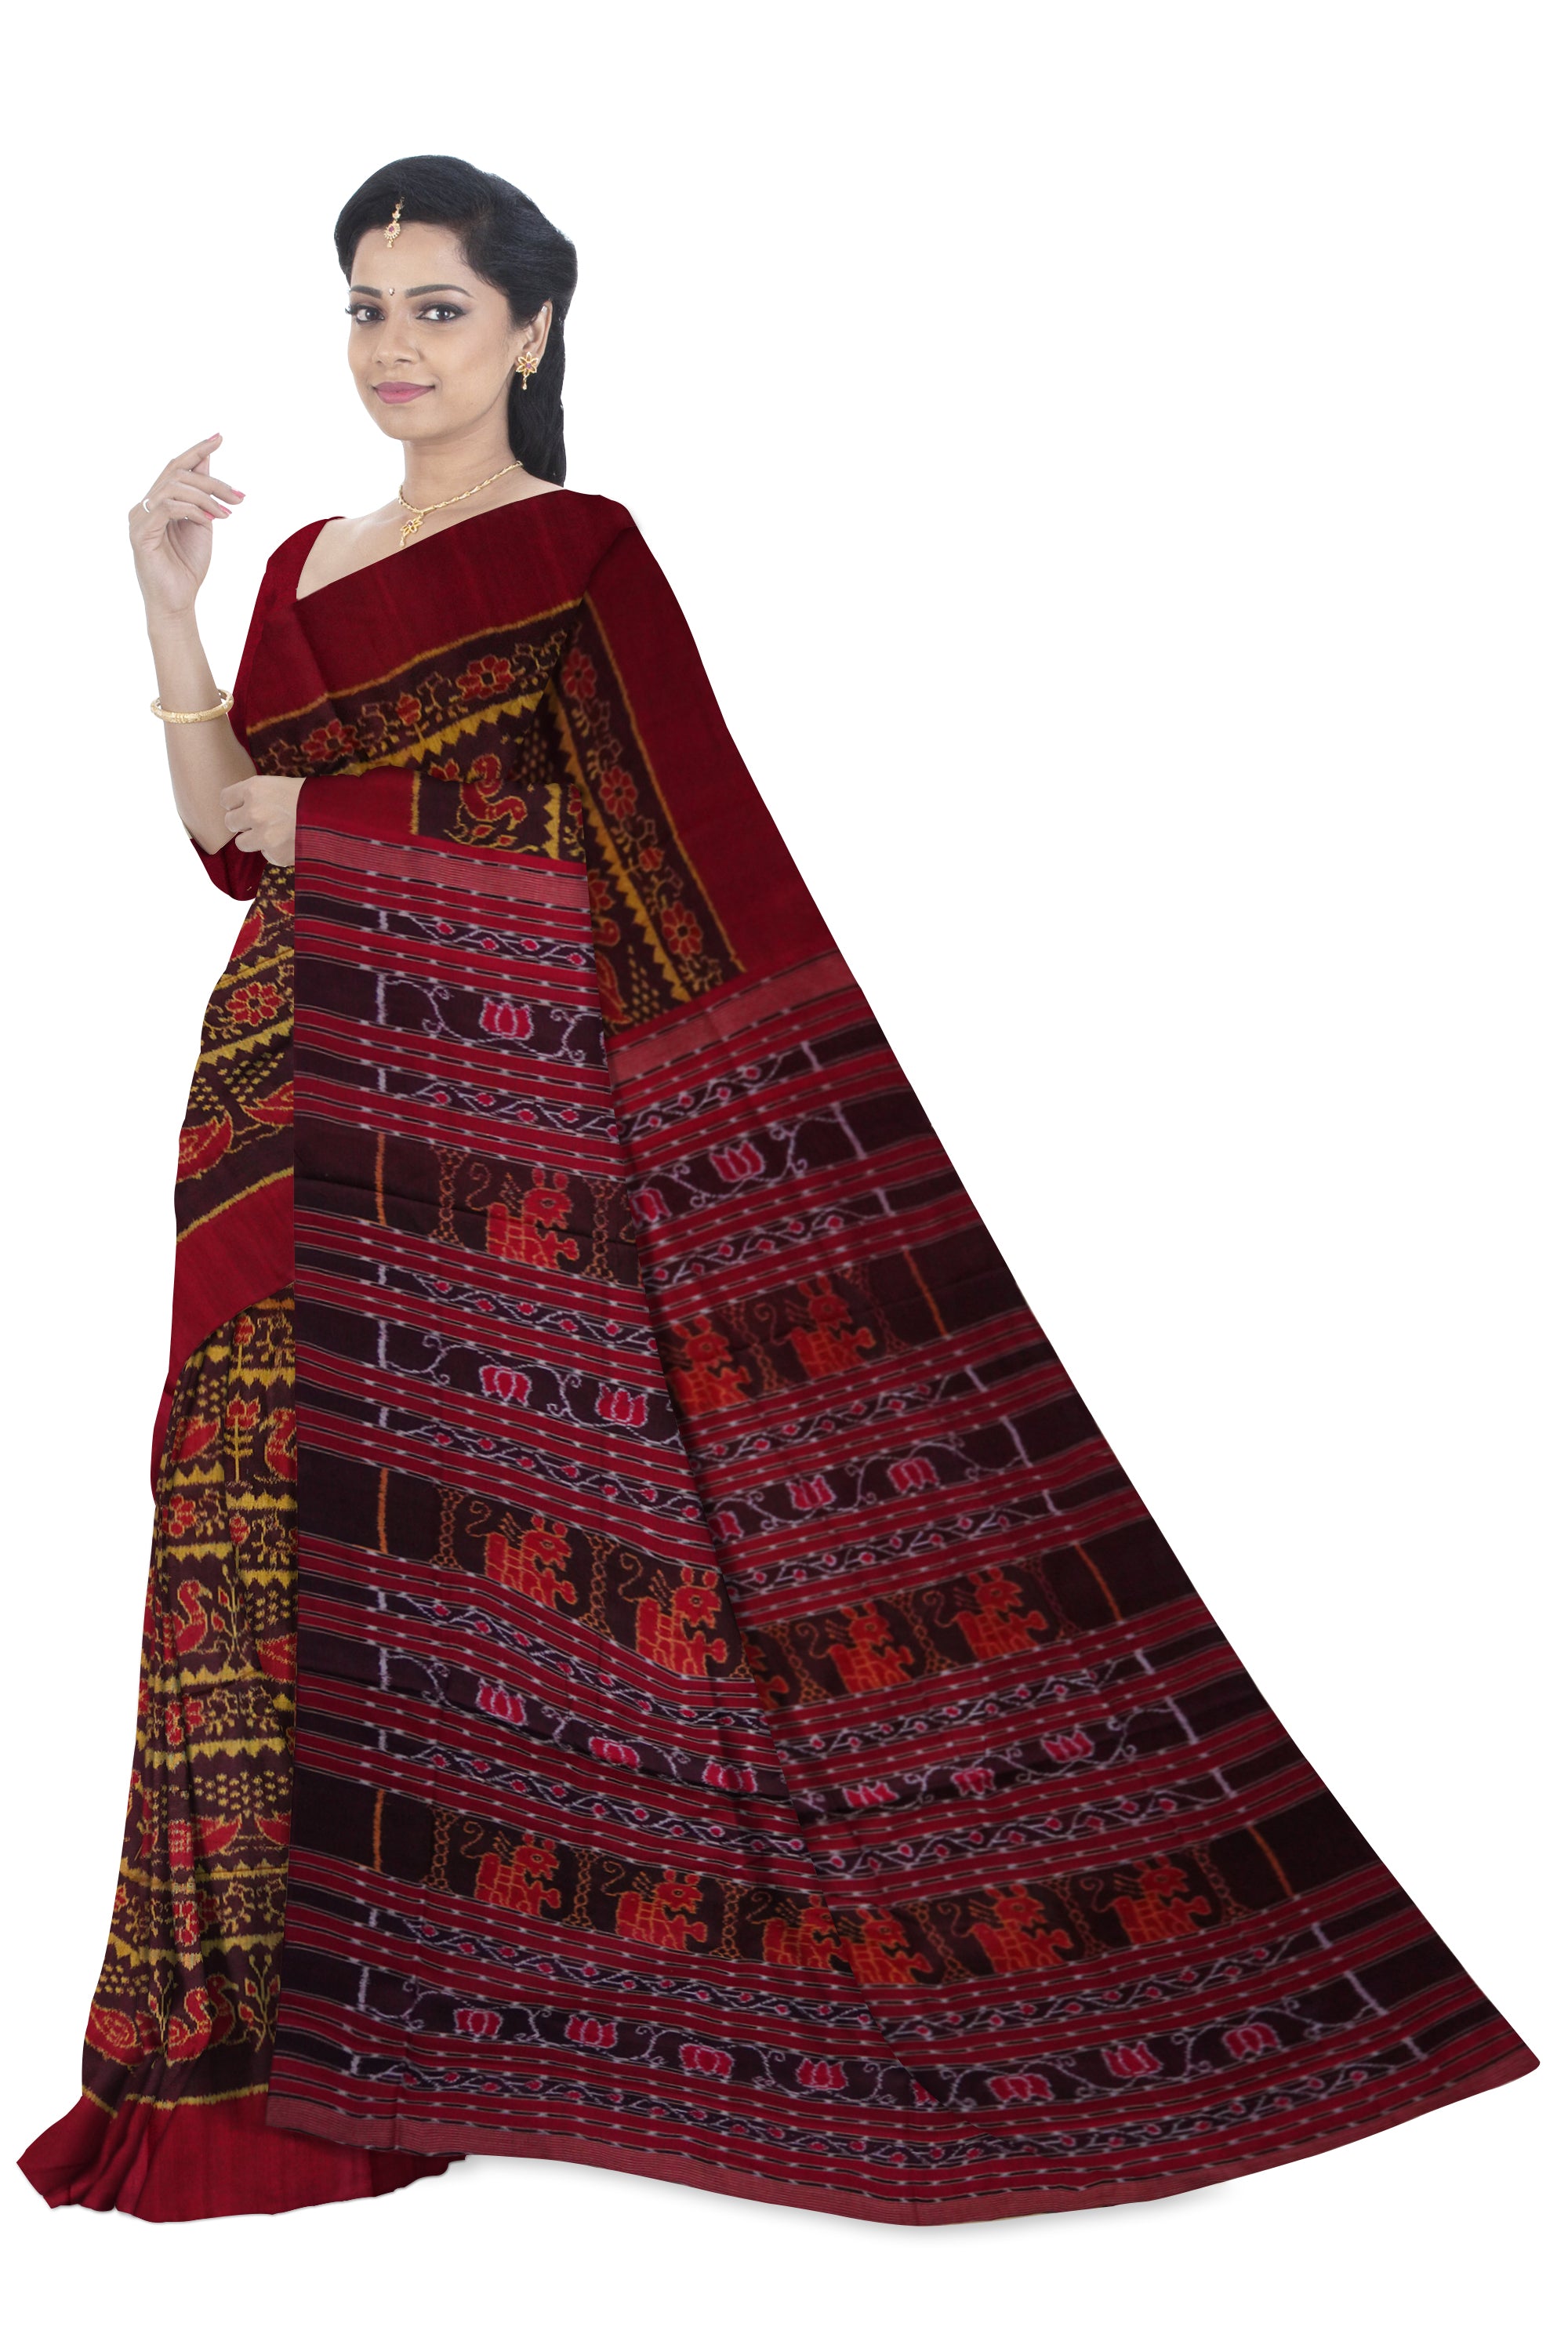 Full body peacock and lotus design with plain border in Coffee and maroon colour sambalpuri saree. - Koshali Arts & Crafts Enterprise